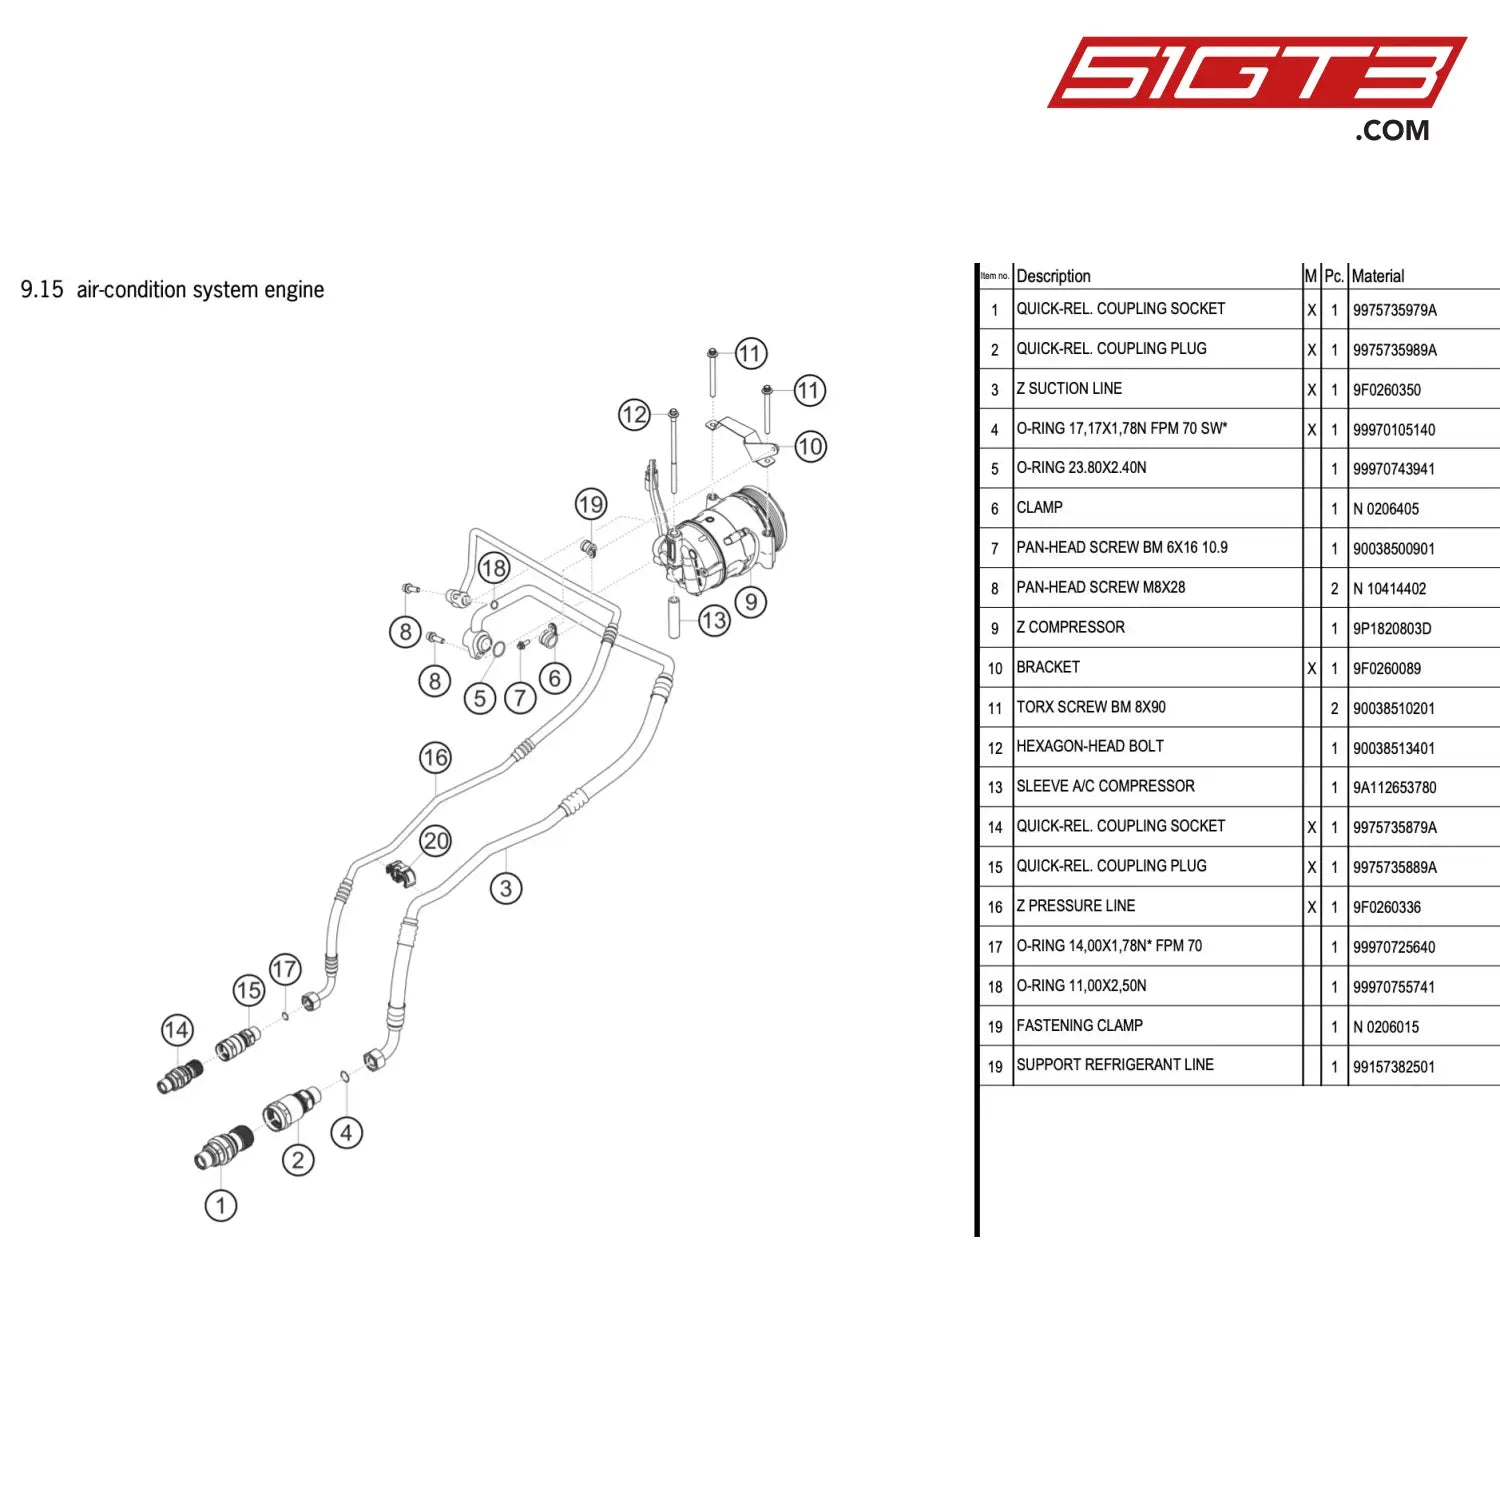 Sleeve A/C Compressor - 9A112653780 [Porsche 911 Gt3 R Type 991 (Gen 2)] Air-Condition System Engine